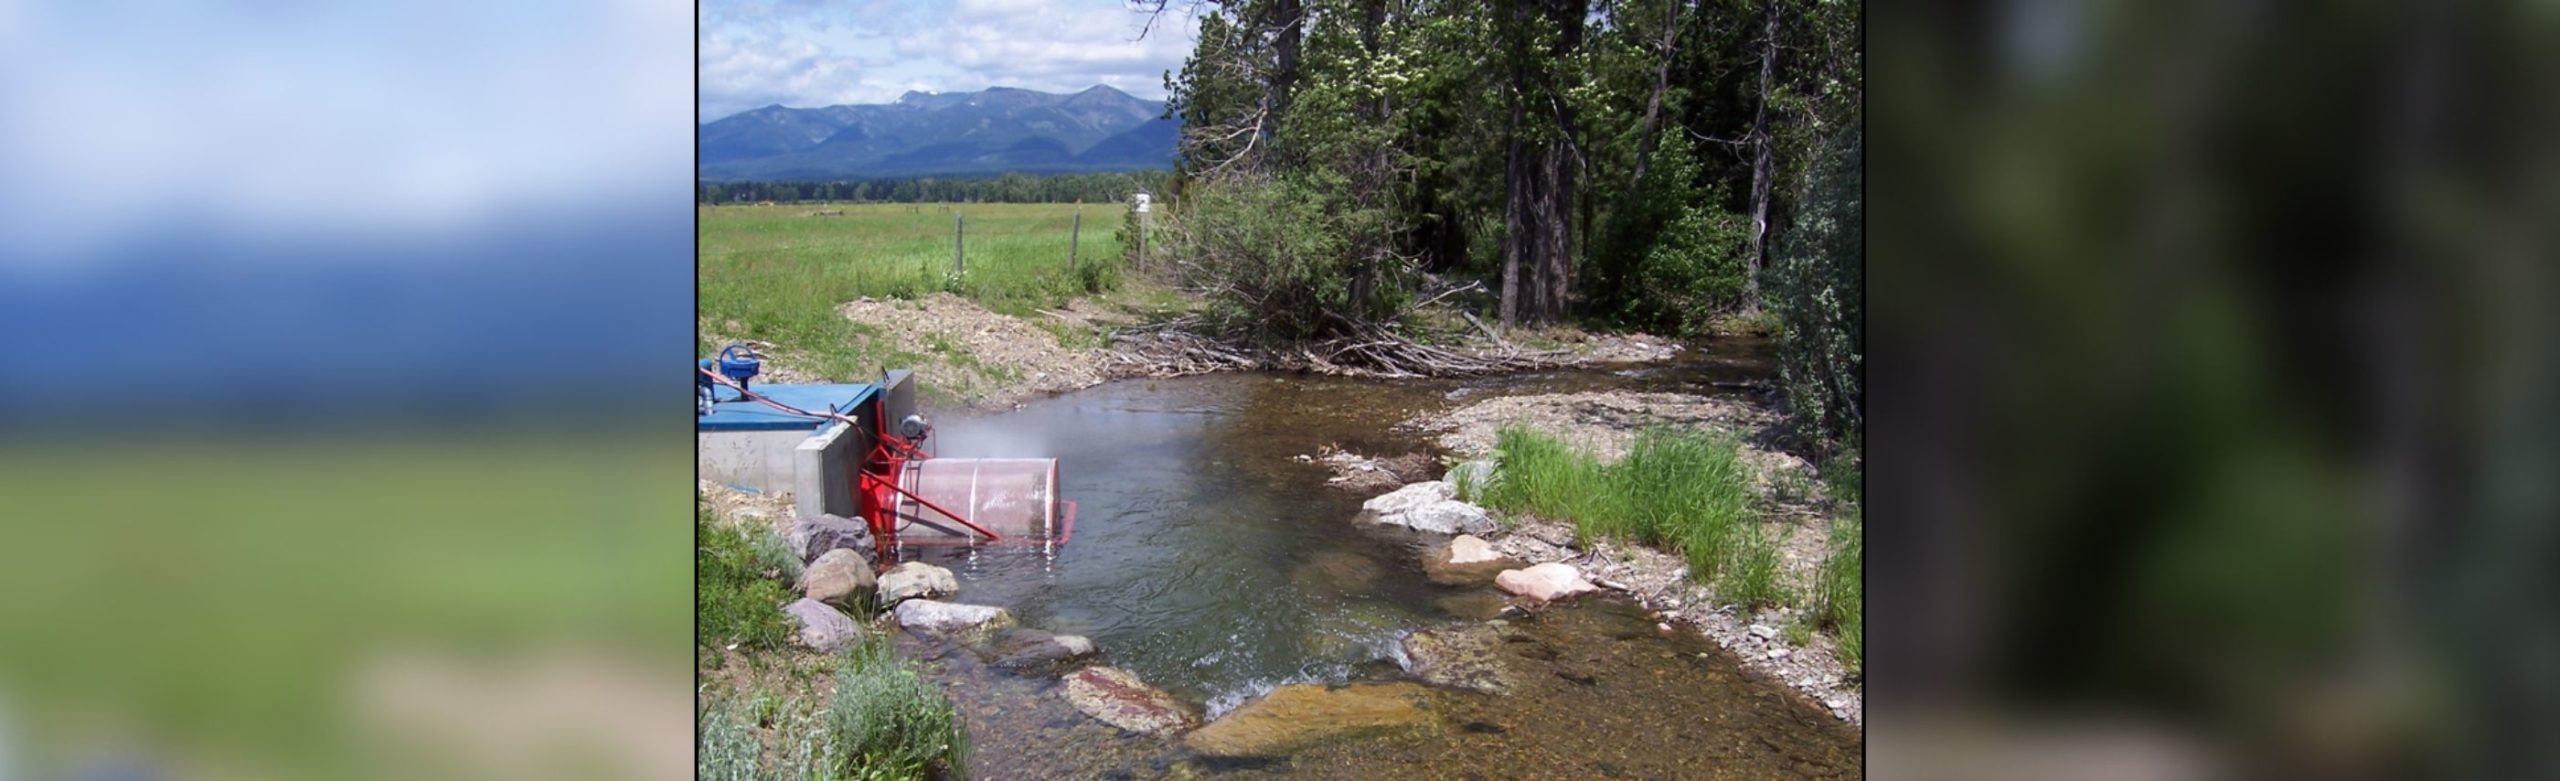 Blackfoot River Fund Update: Fish Screen Maintenance Program Image